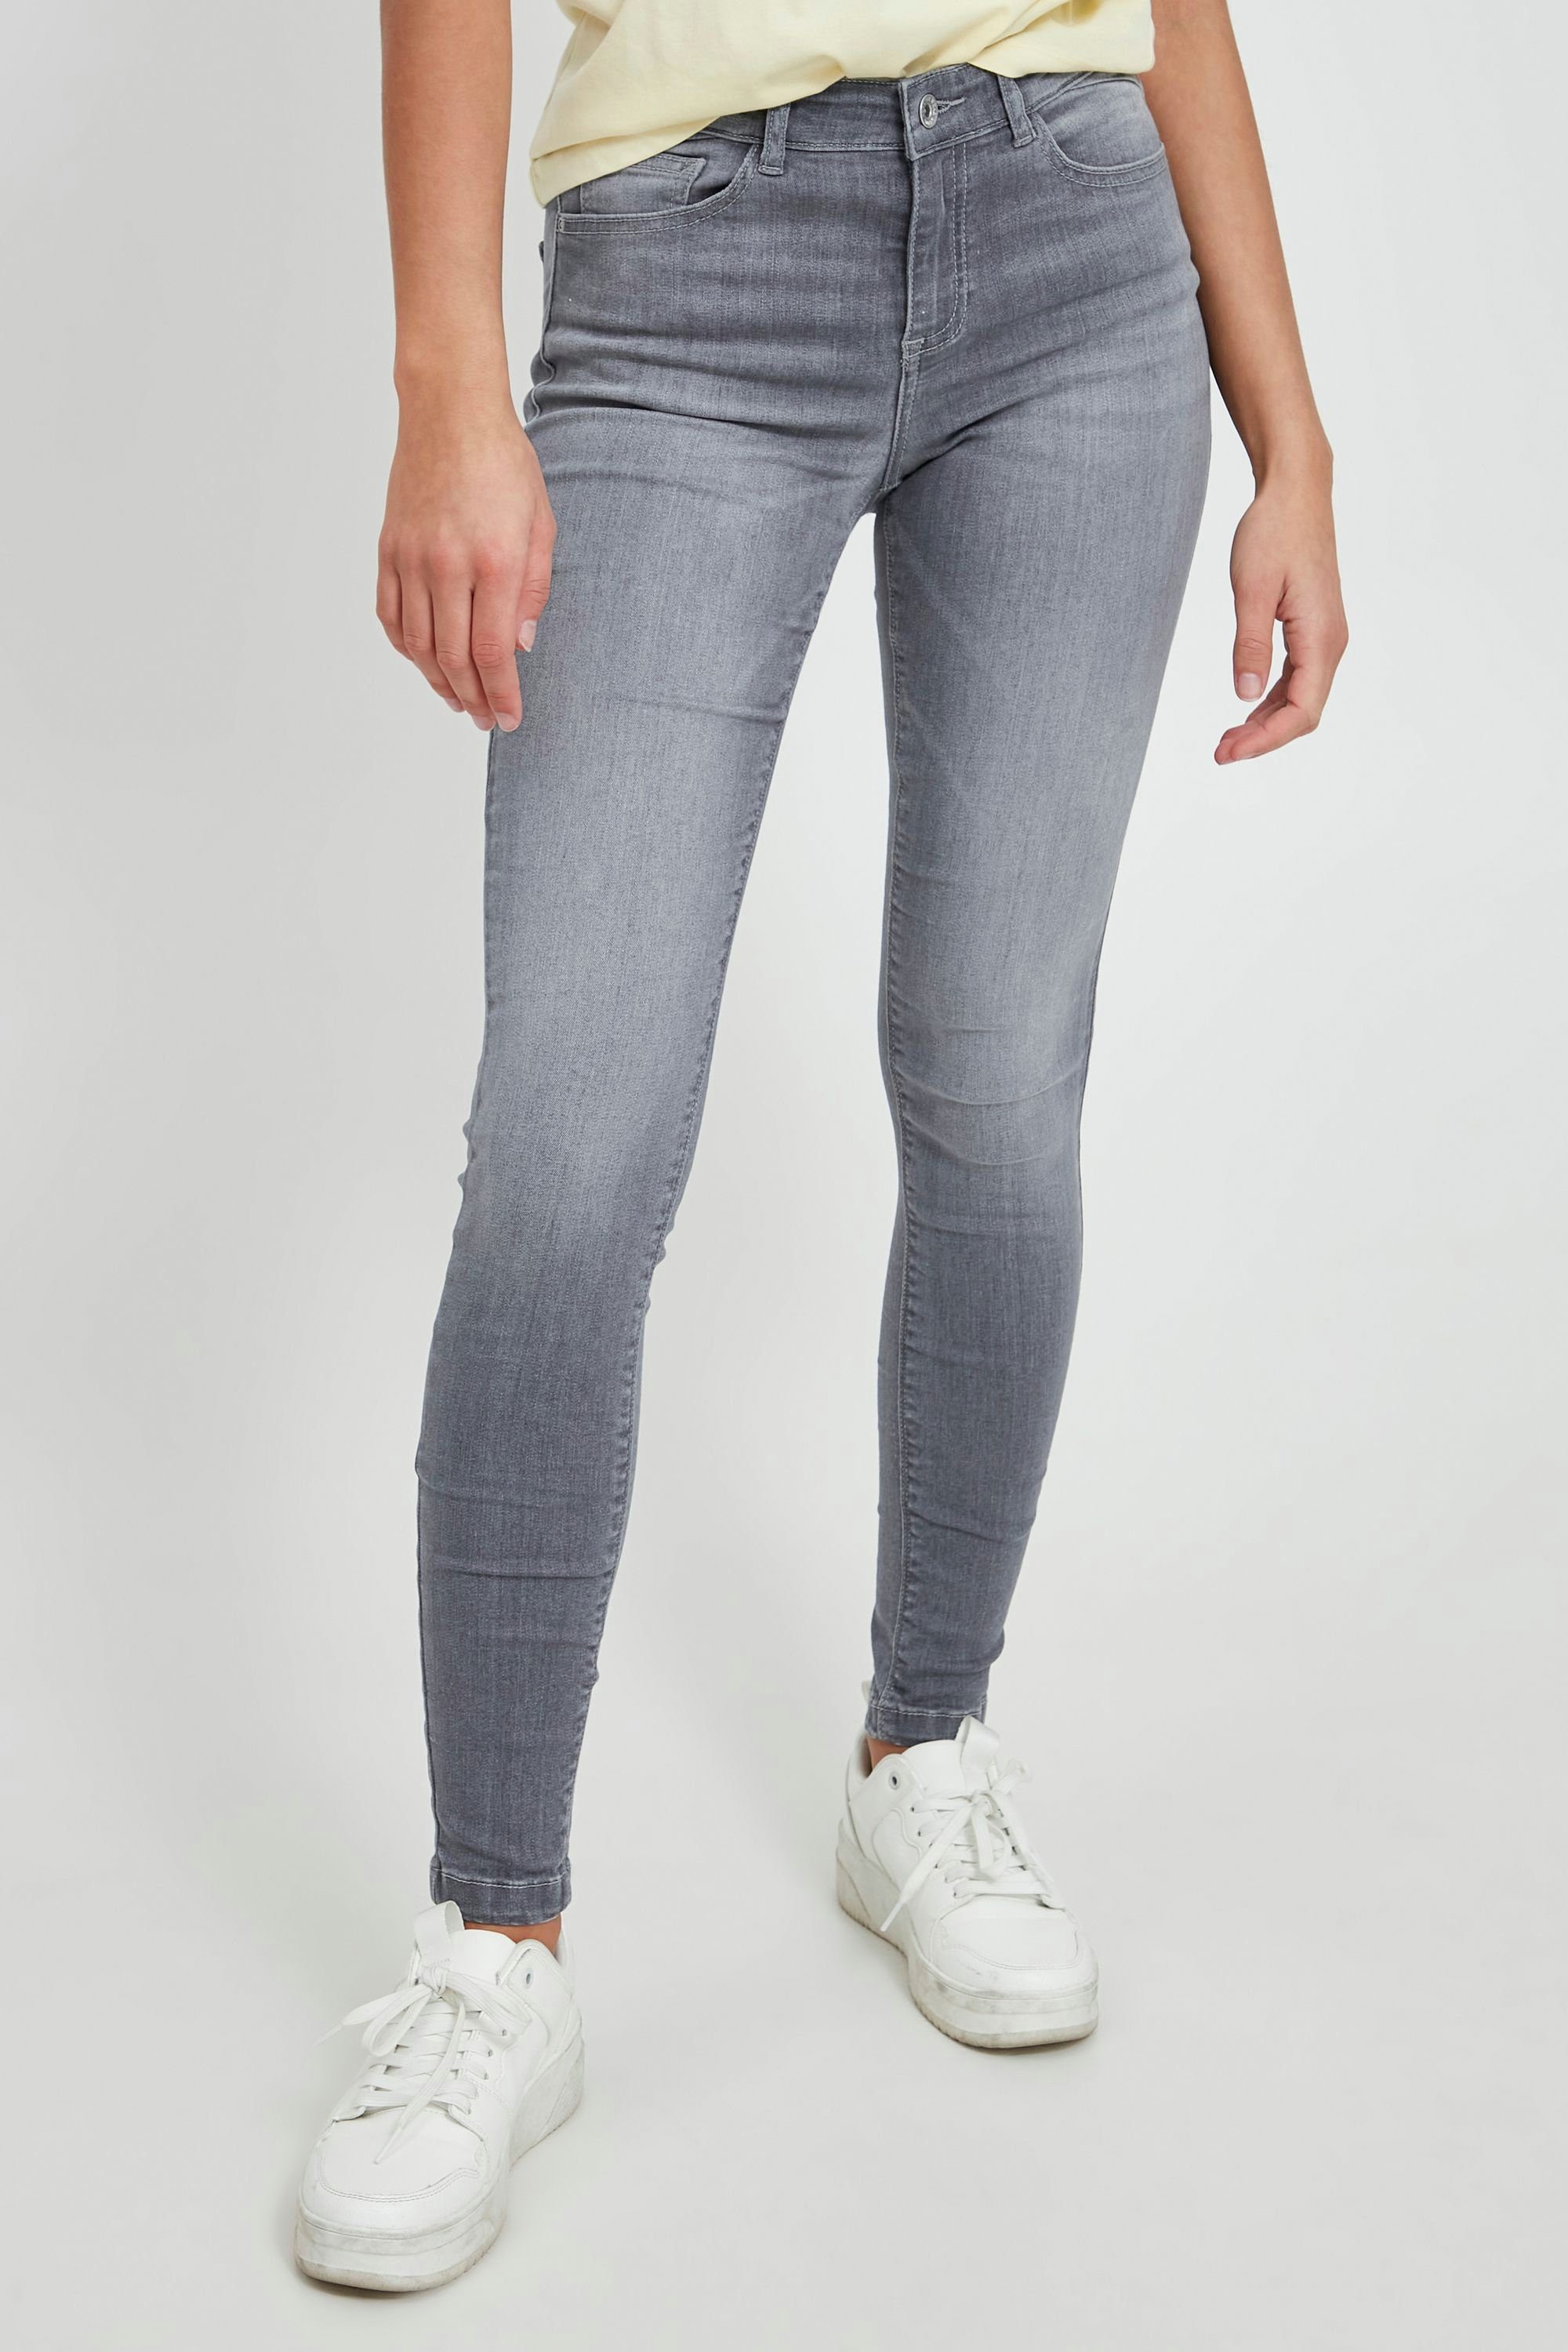 jeans Skinny-fit-Jeans Grey (200463) Light Luni 20803214 b.young BYLola - Denim